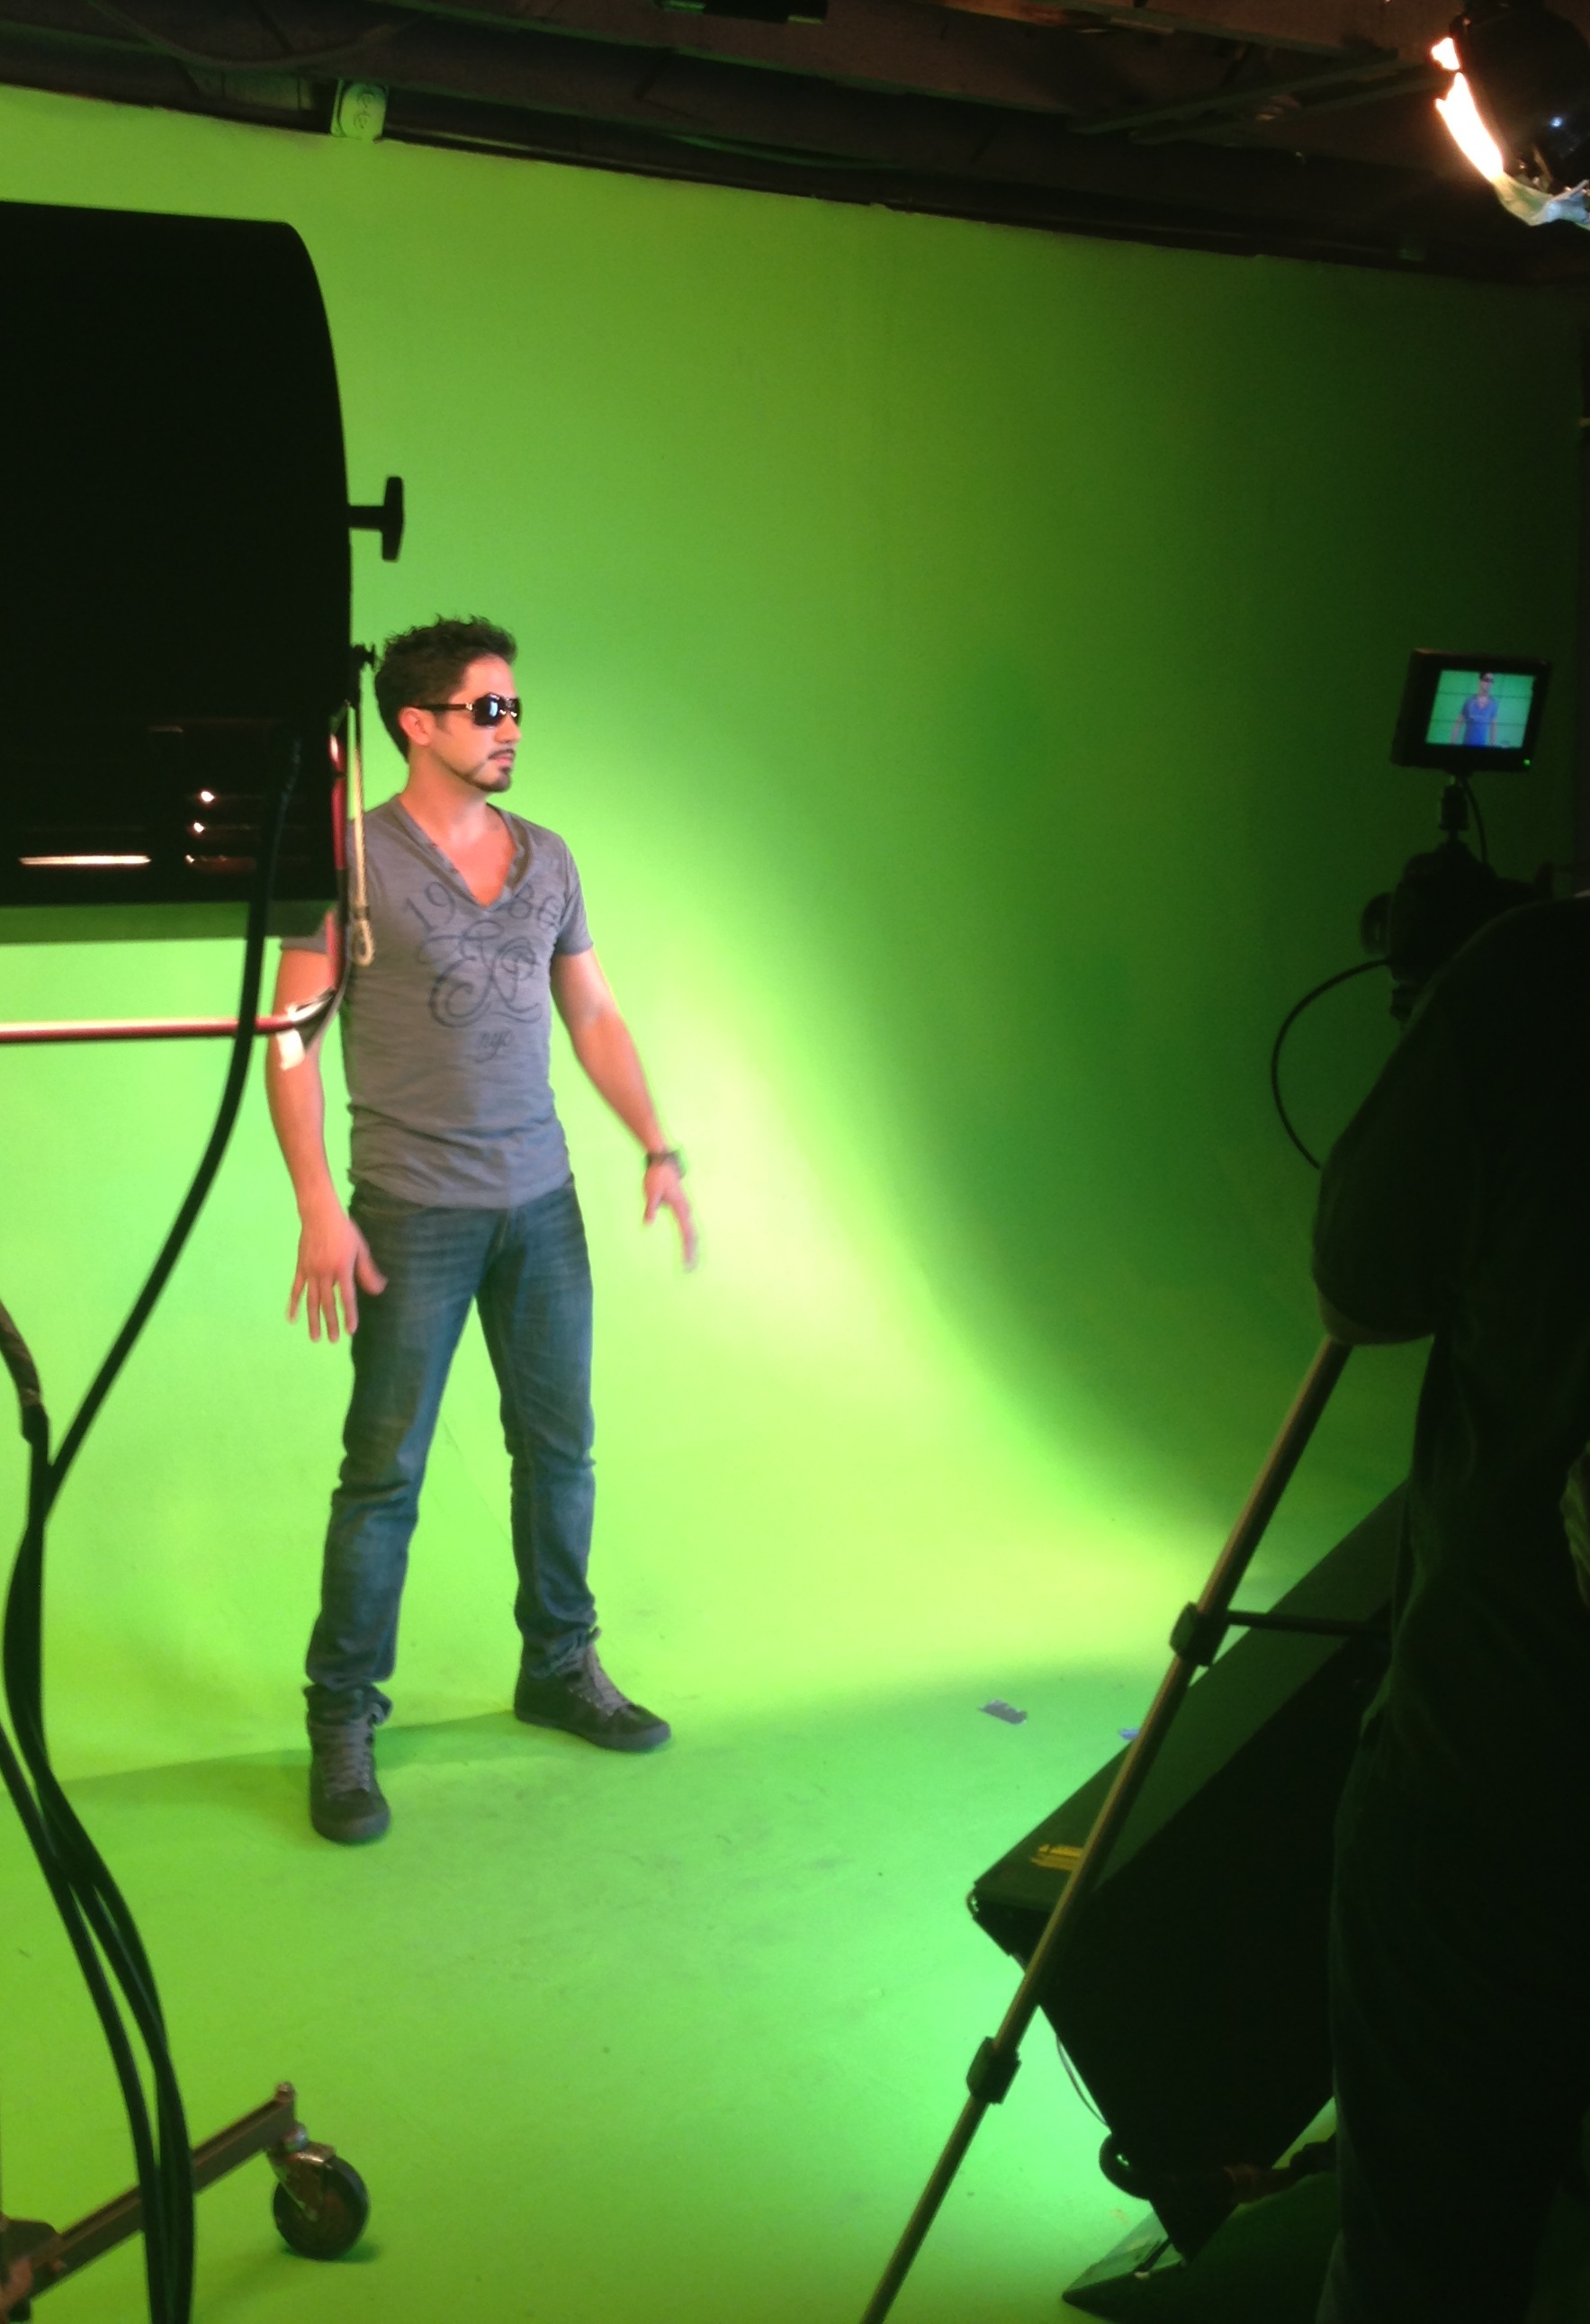 Music Video shooting - Juan Jme